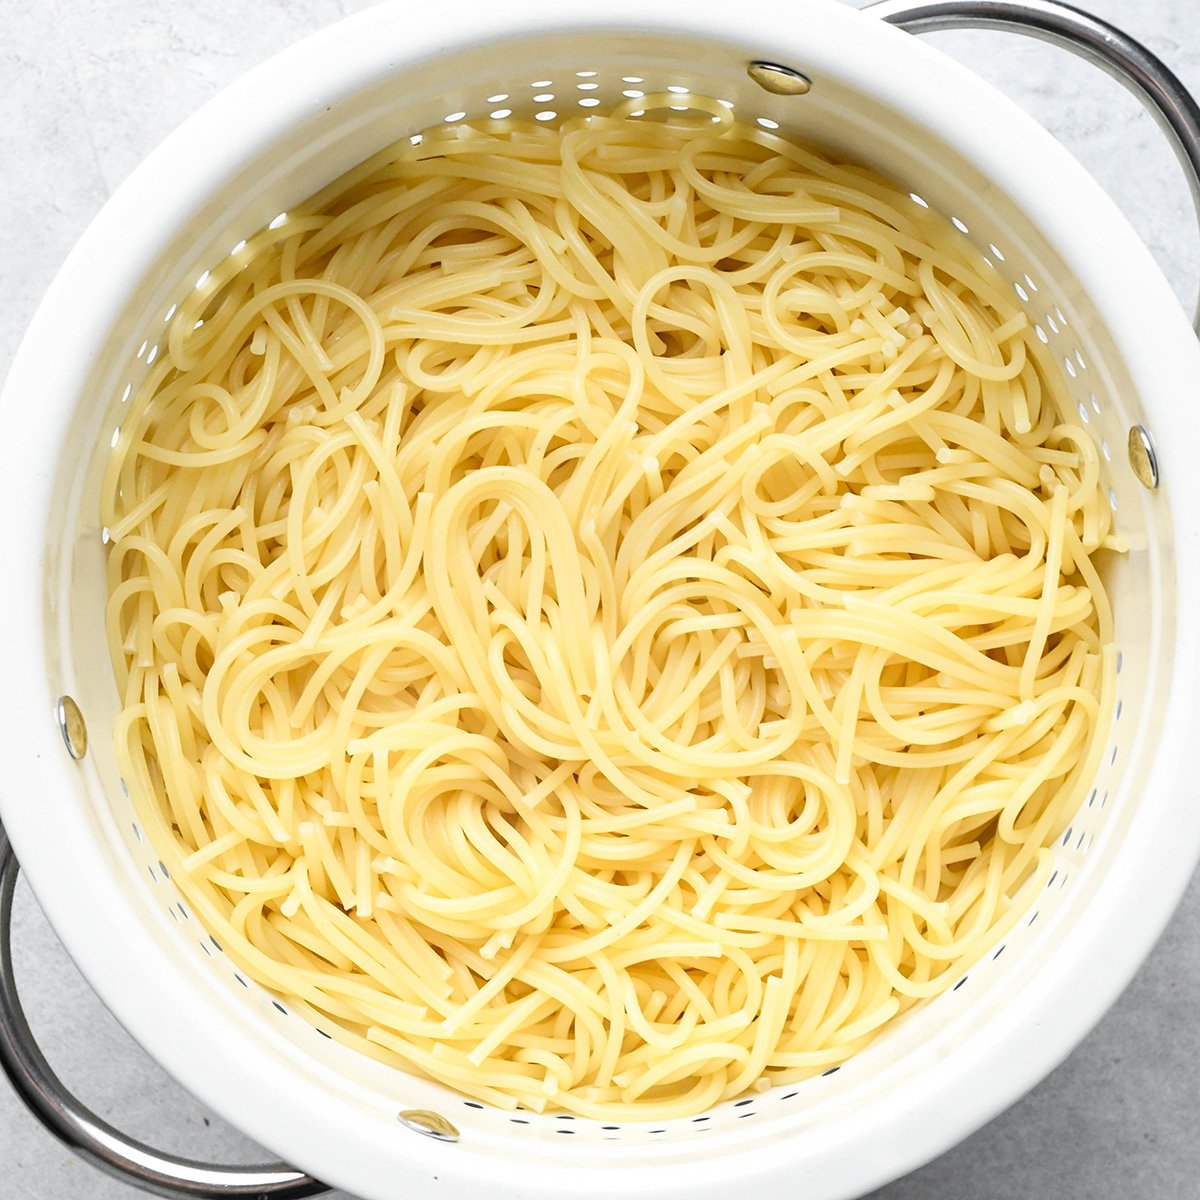 noodles draining in a colander to make Pesto Pasta Recipe